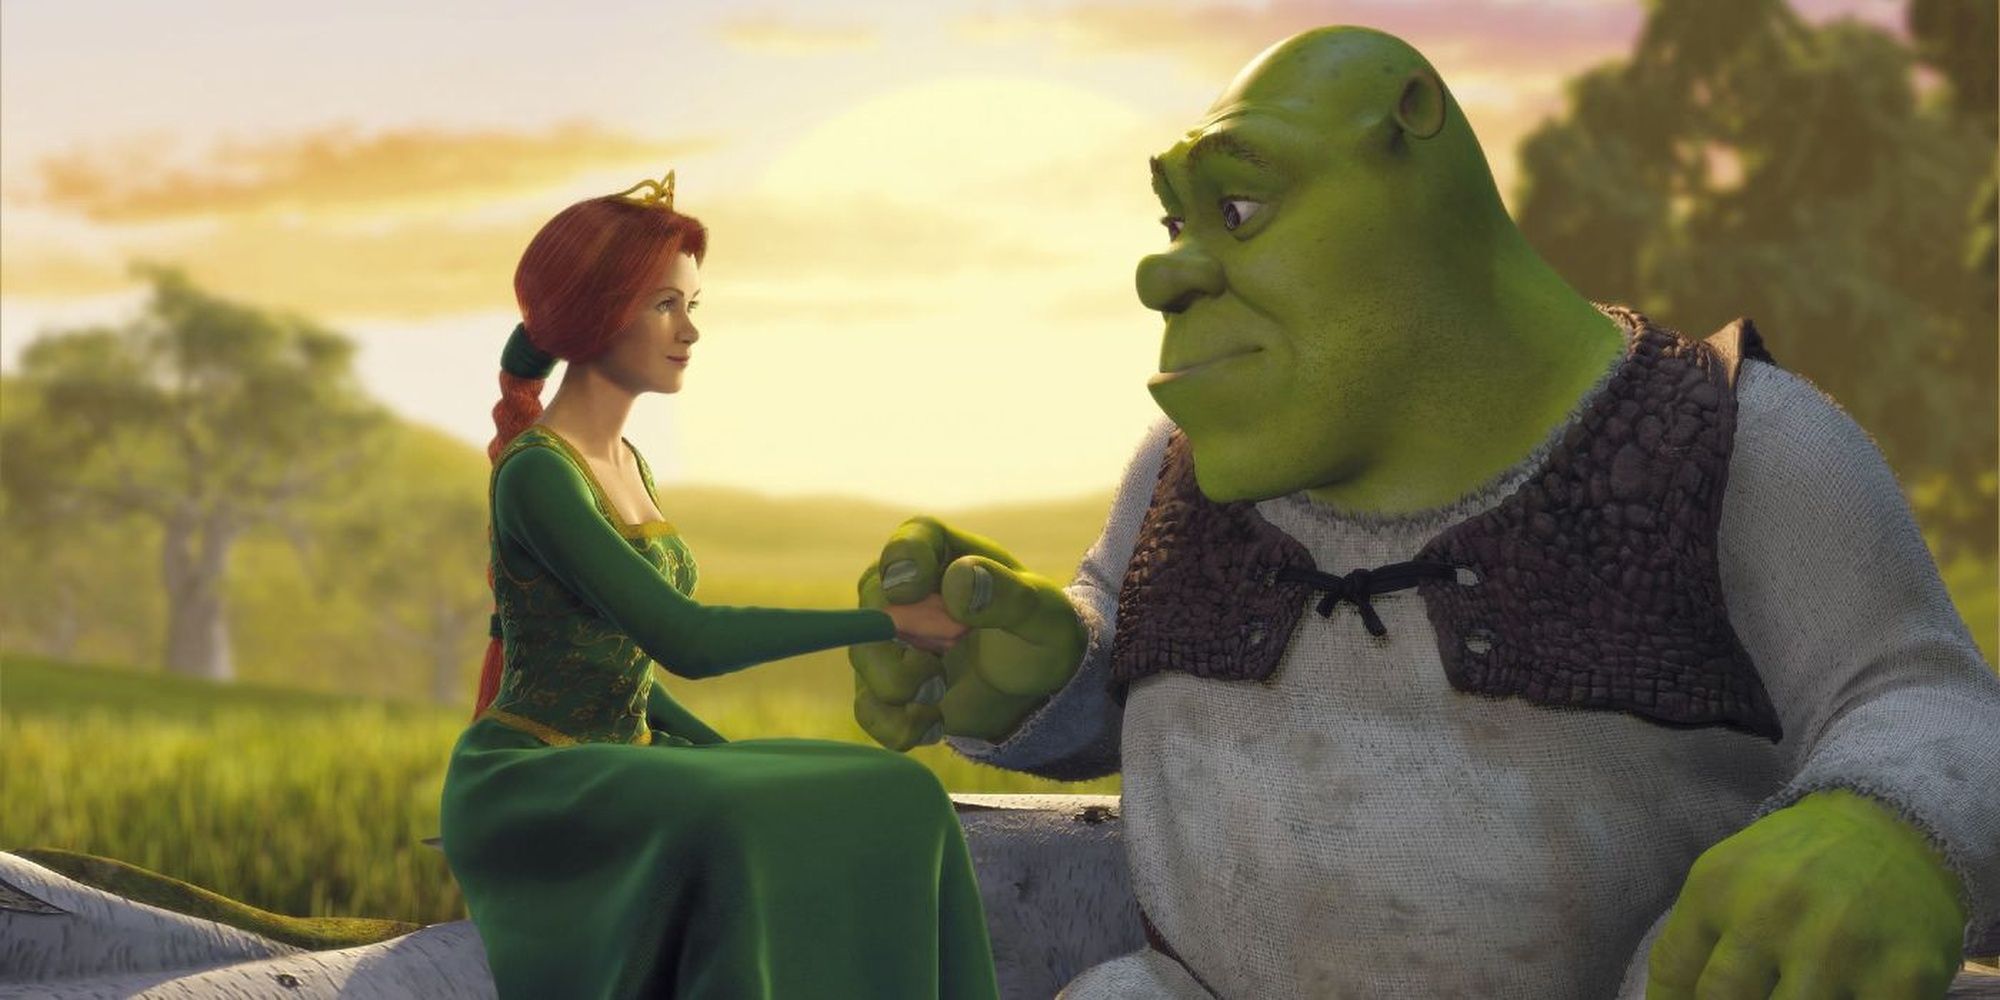 Shrek and Fiona in the first Shrek movie